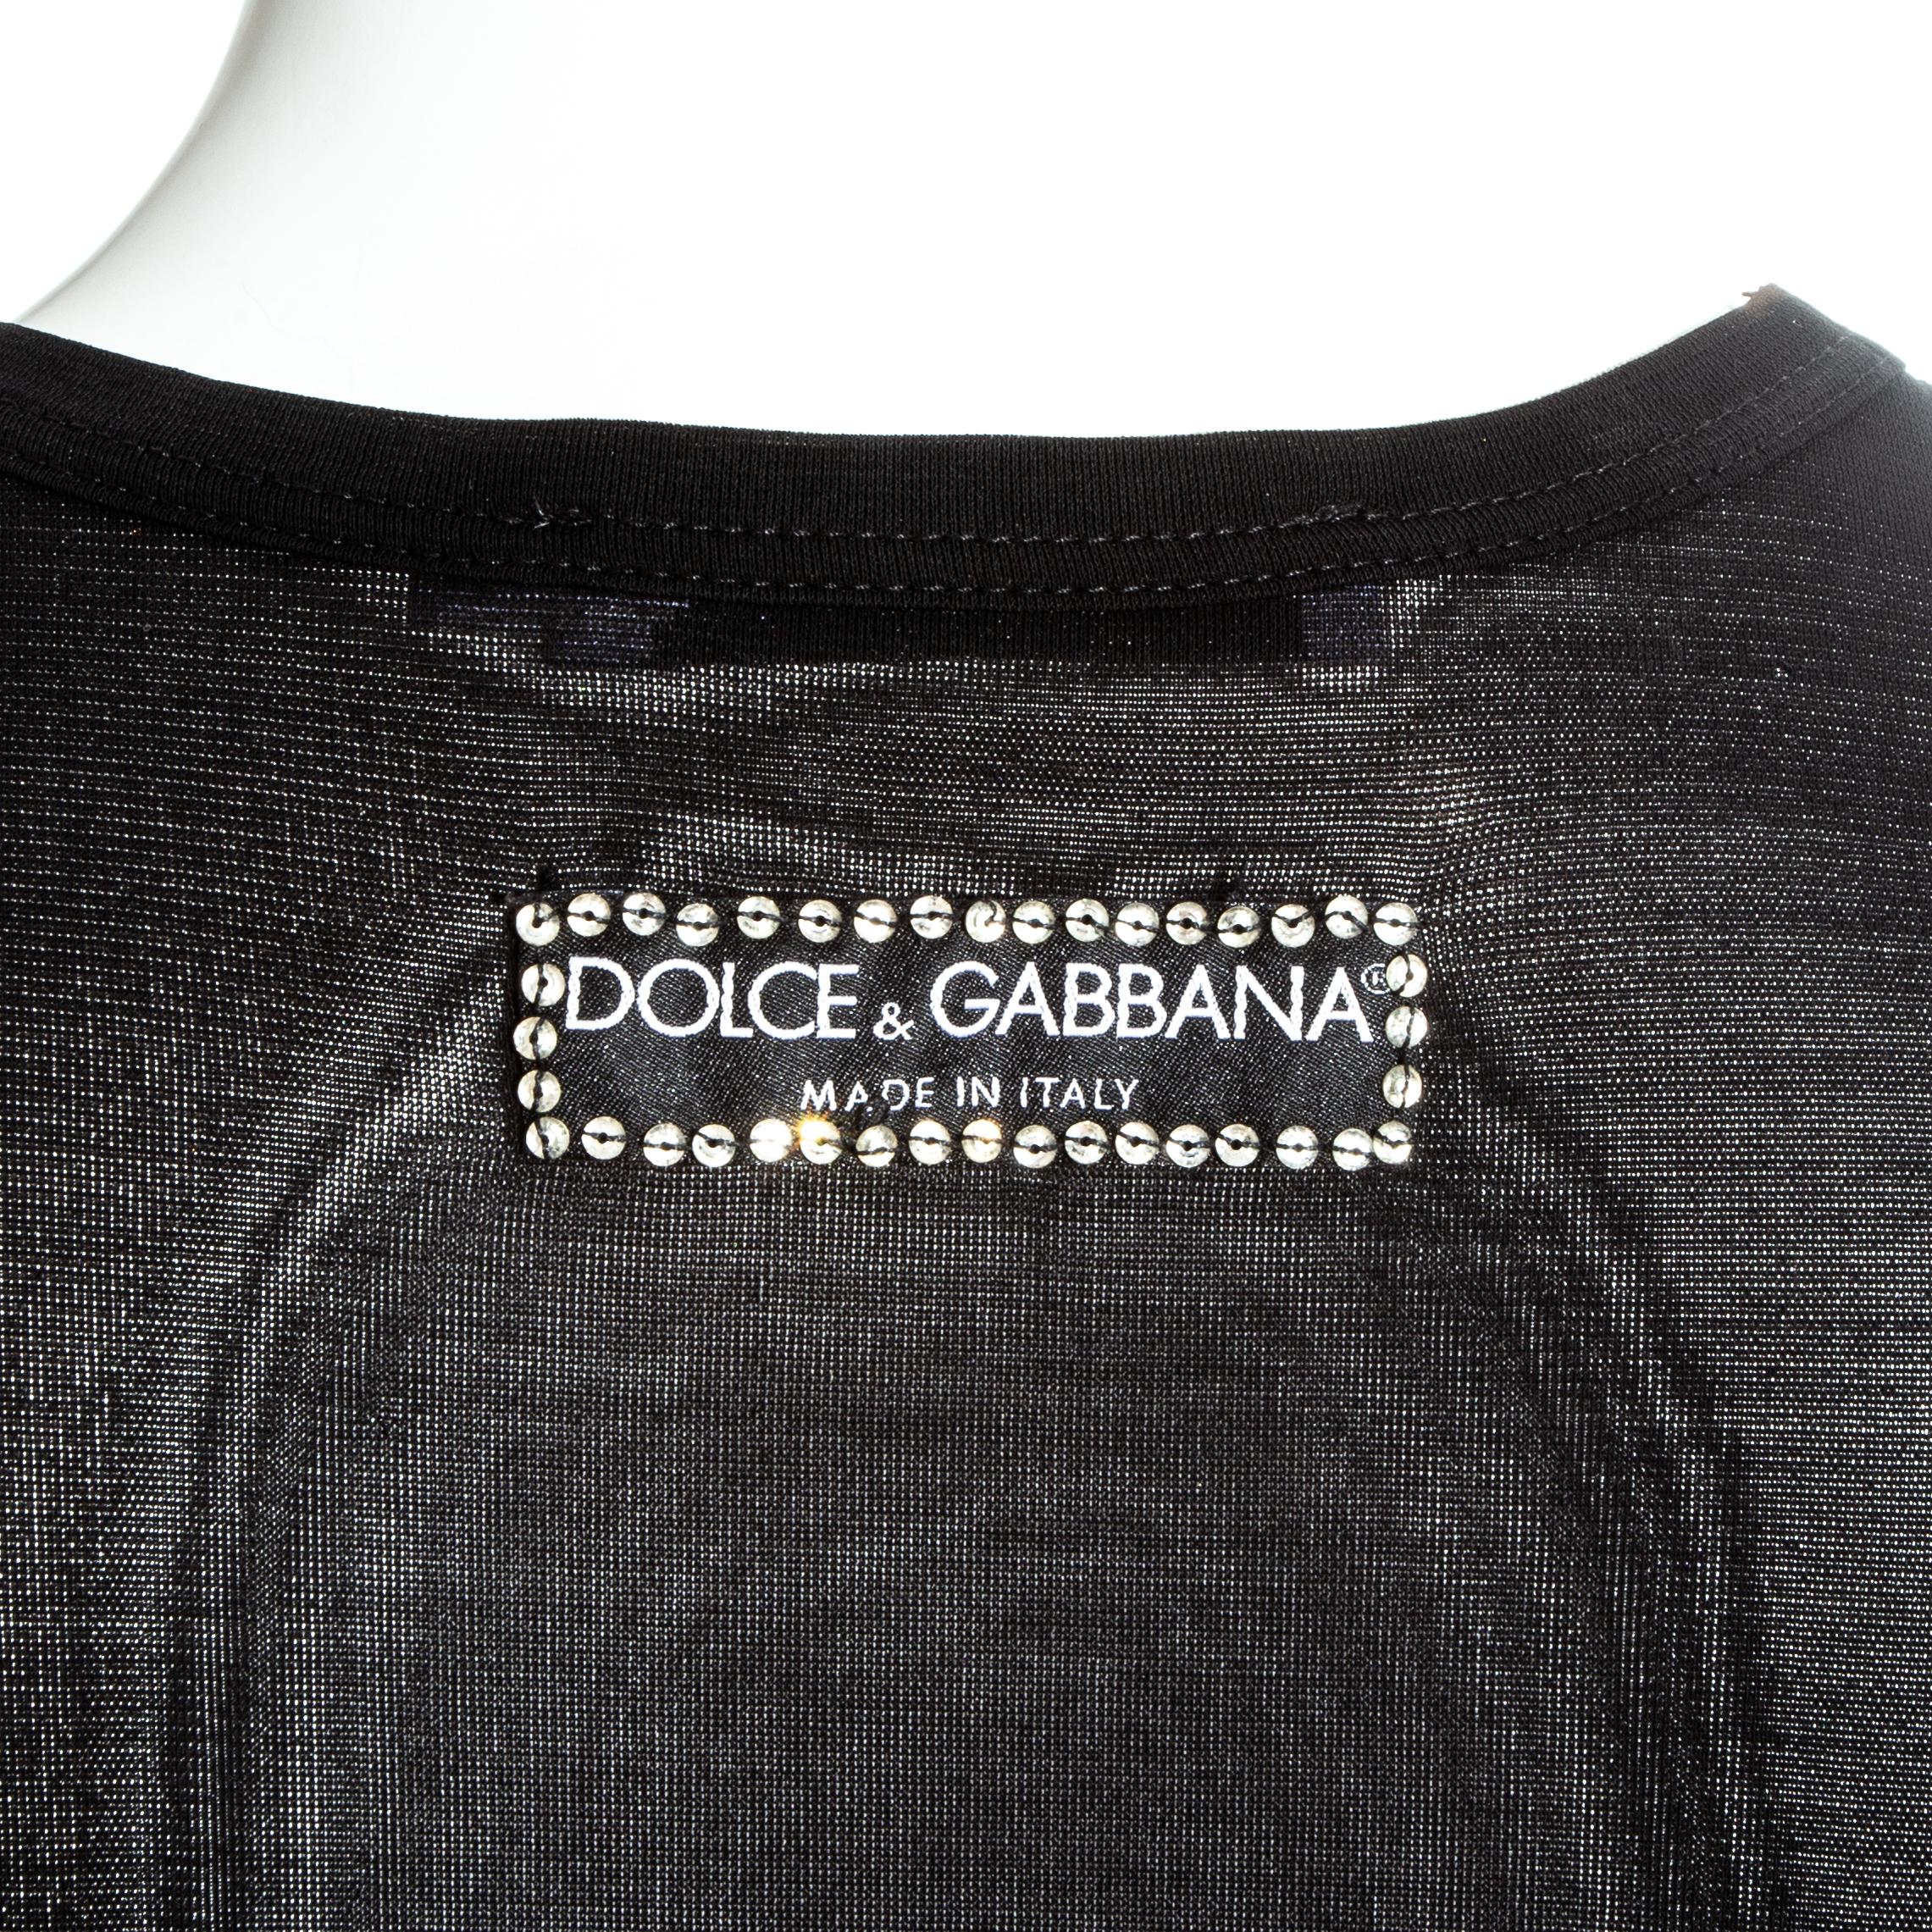 Women's Dolce & Gabbana black mesh and rhinestone Madonna 'LIKE A VIRGIN' vest, ss 2001